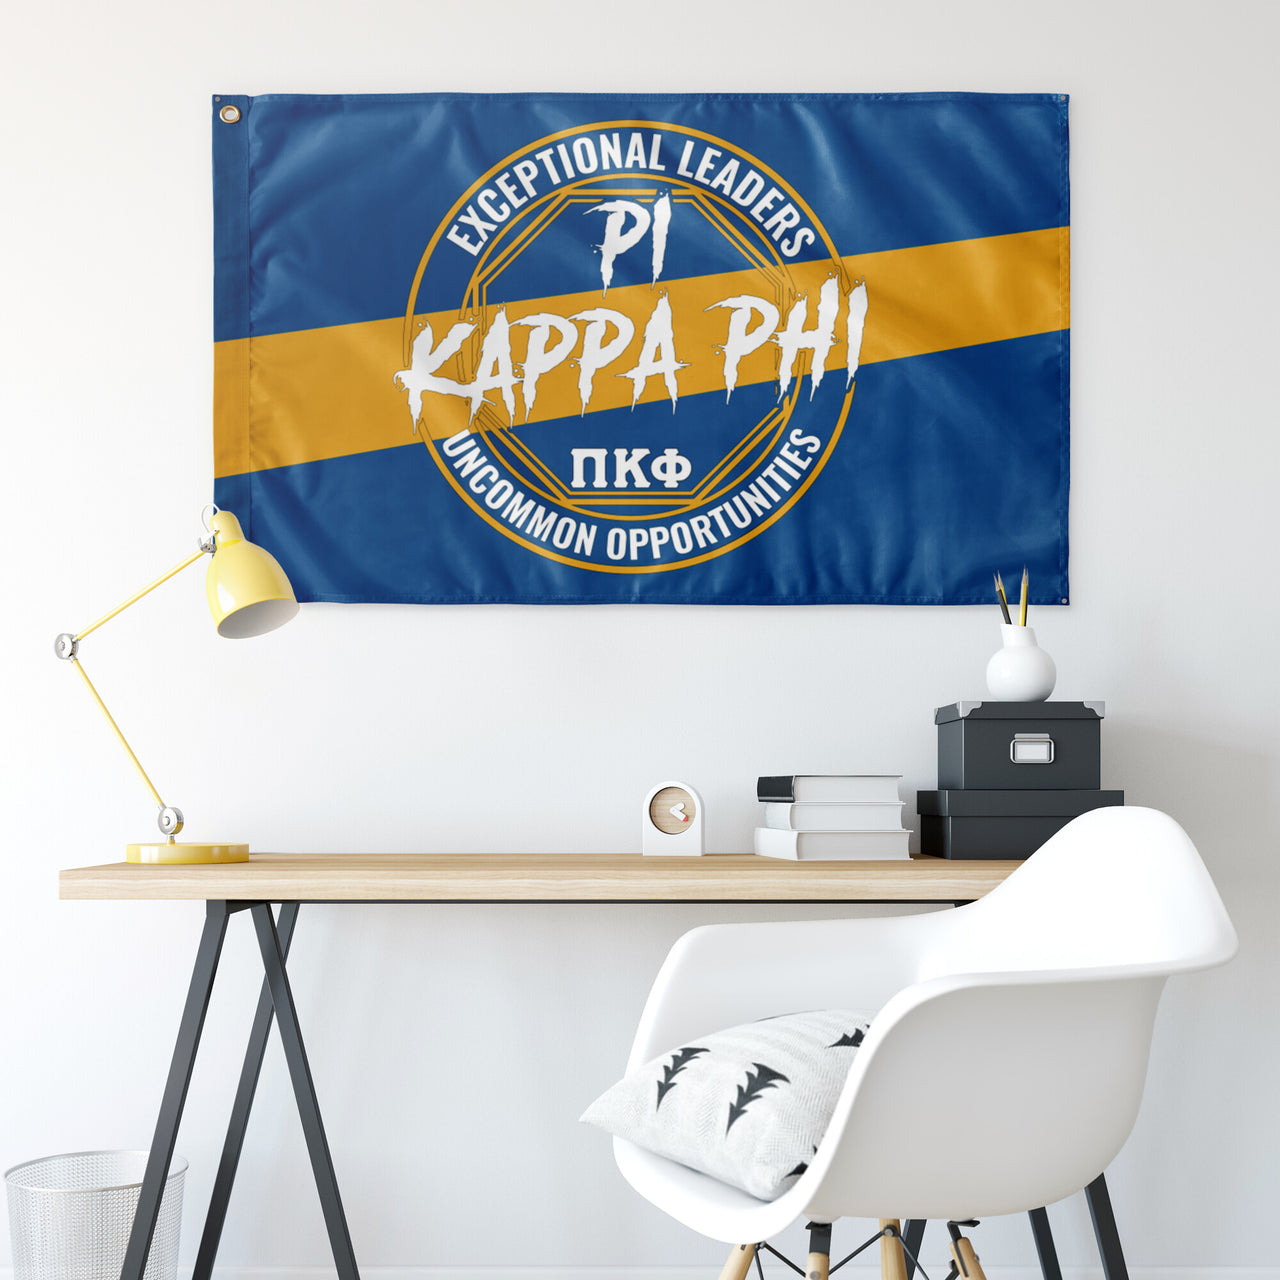 Pi Kappa Phi Honor Flag